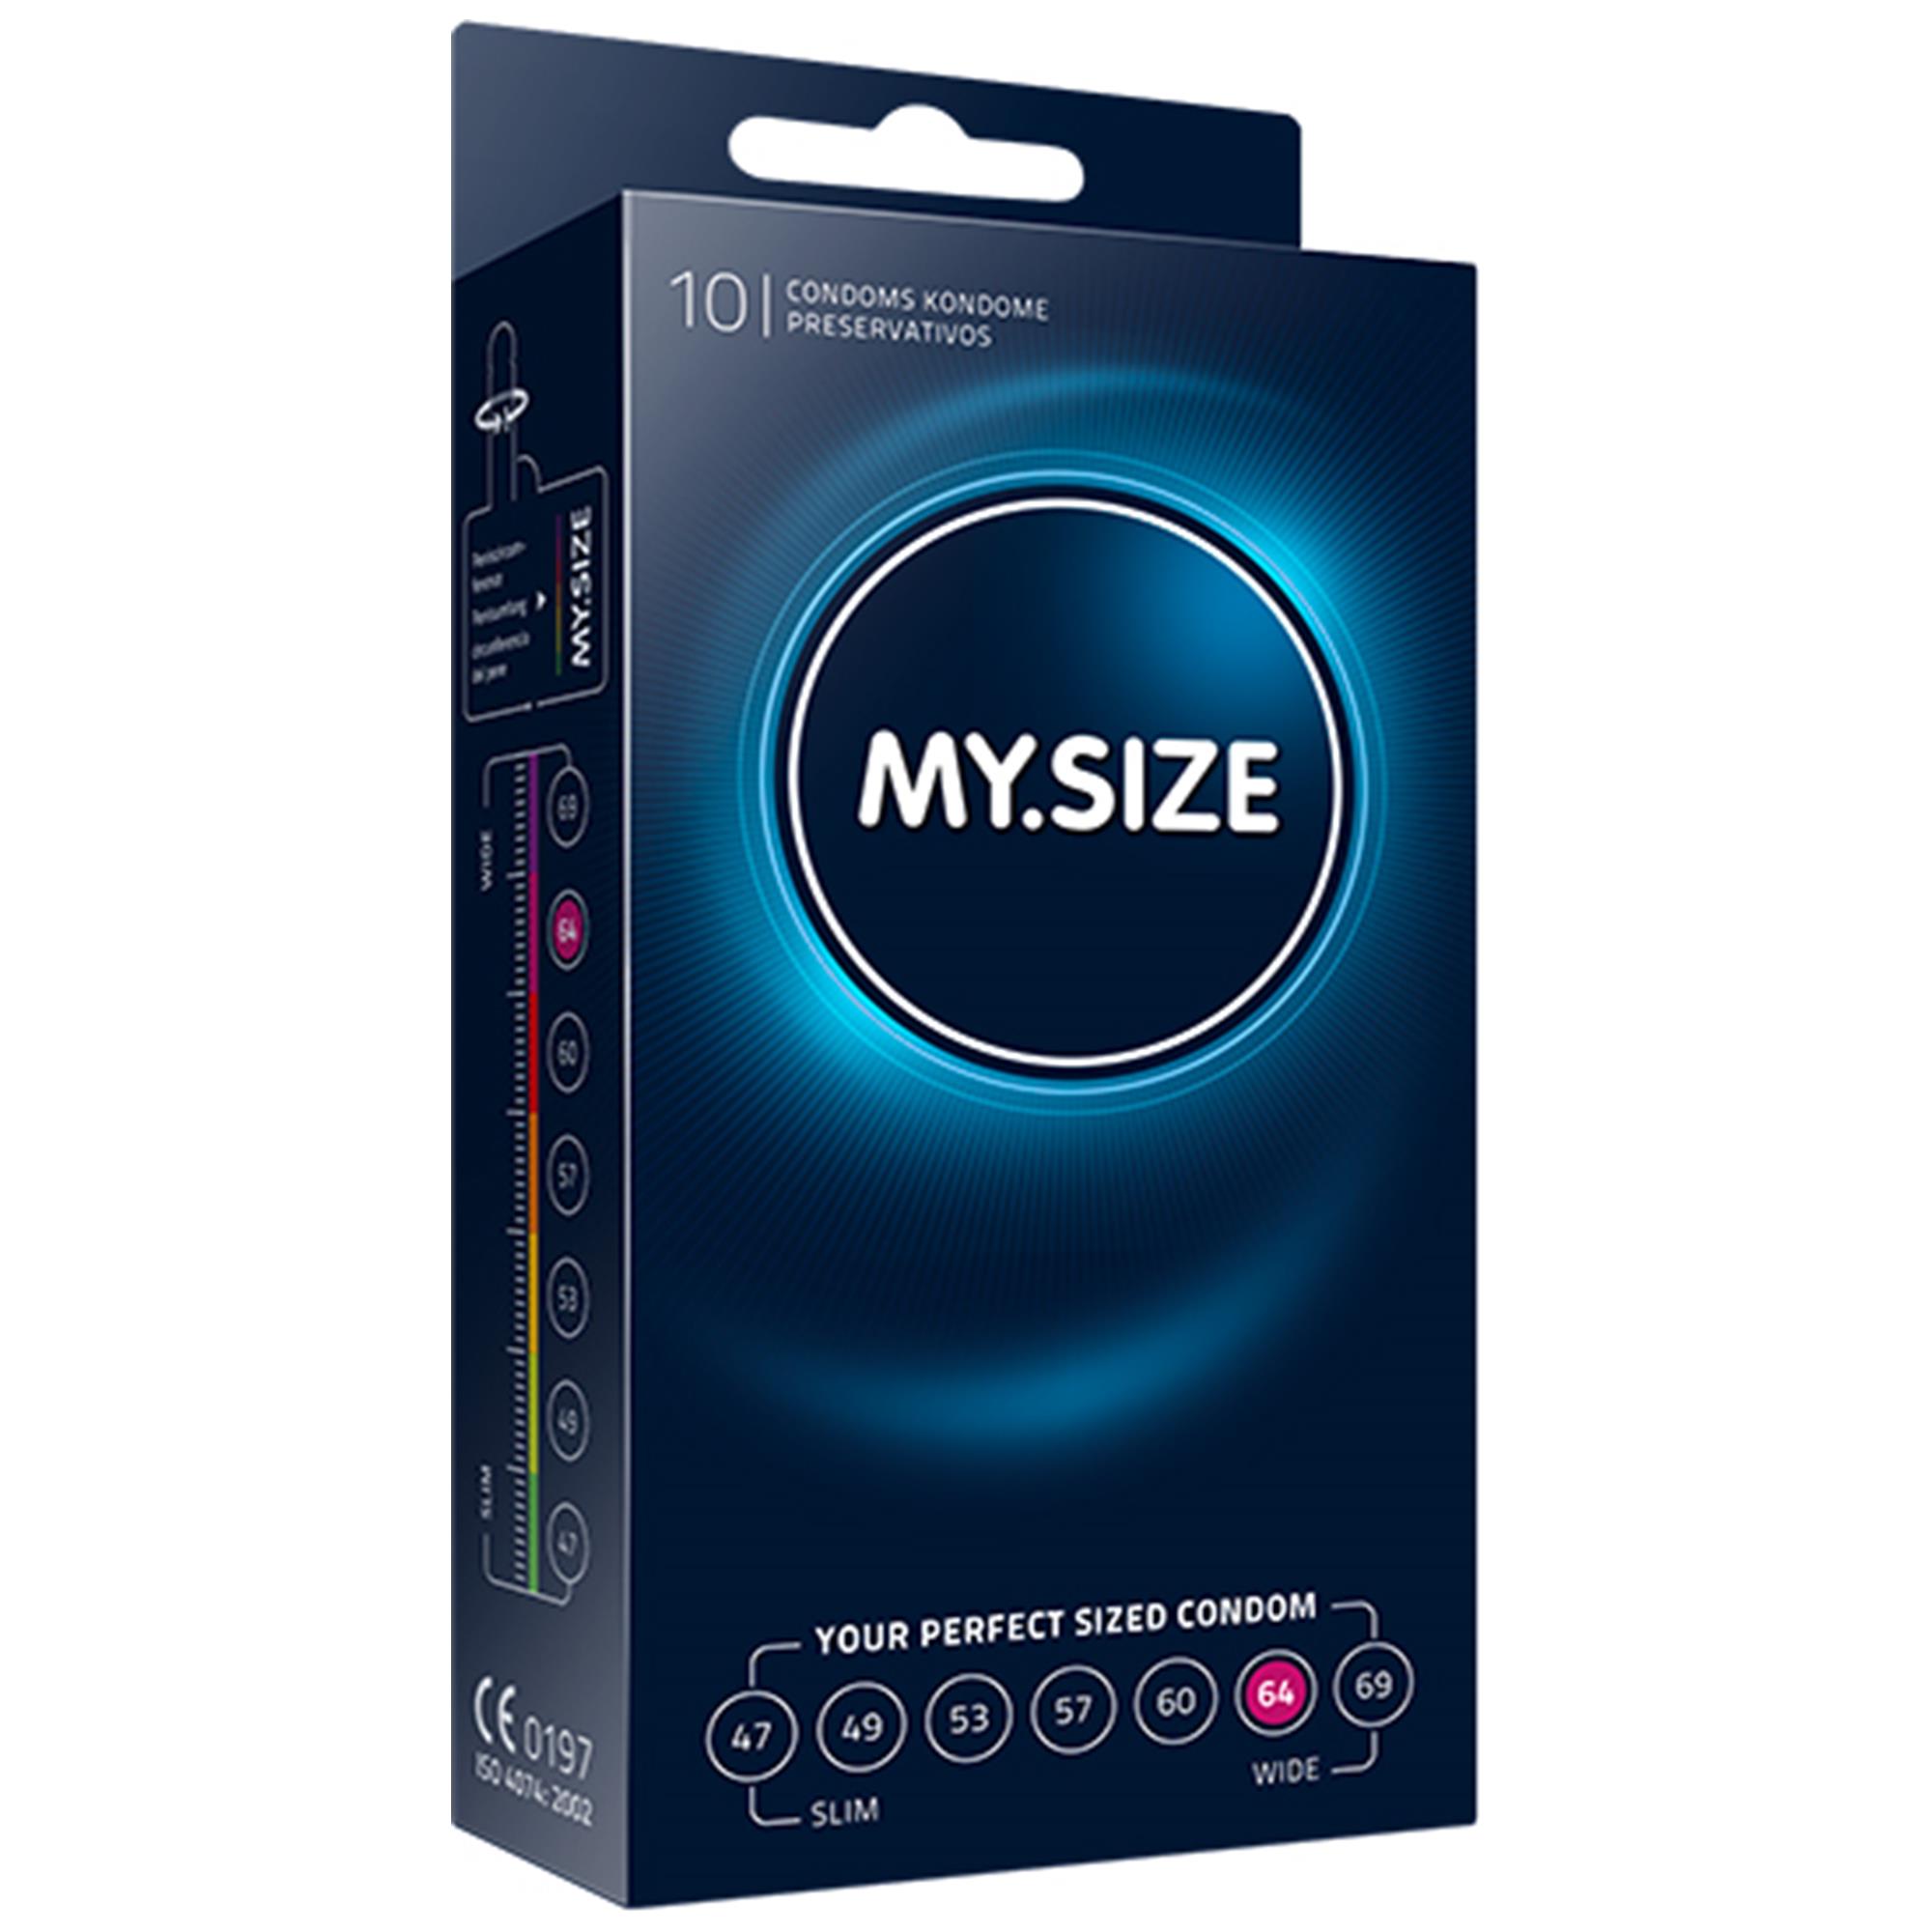 My Size Kondom 64 mm - 10-pack | Kondomer | Intimast